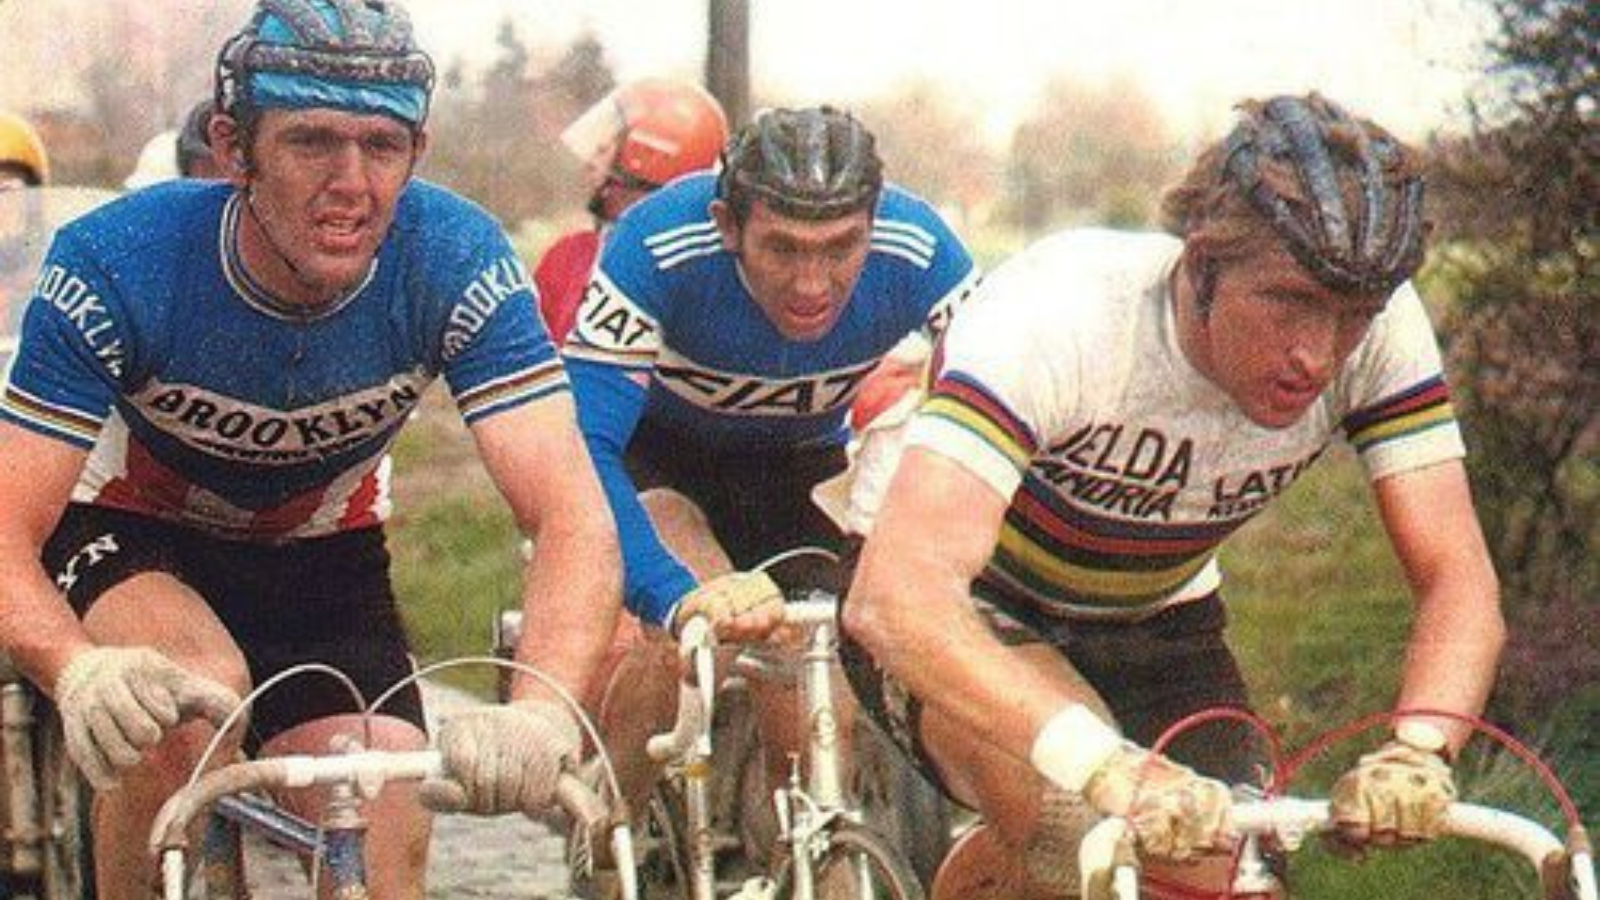 Roger De Vlaeminck, Eddy Merckx and Freddy Maertens were the leading trio of Ronde van Vlaanderen 1977